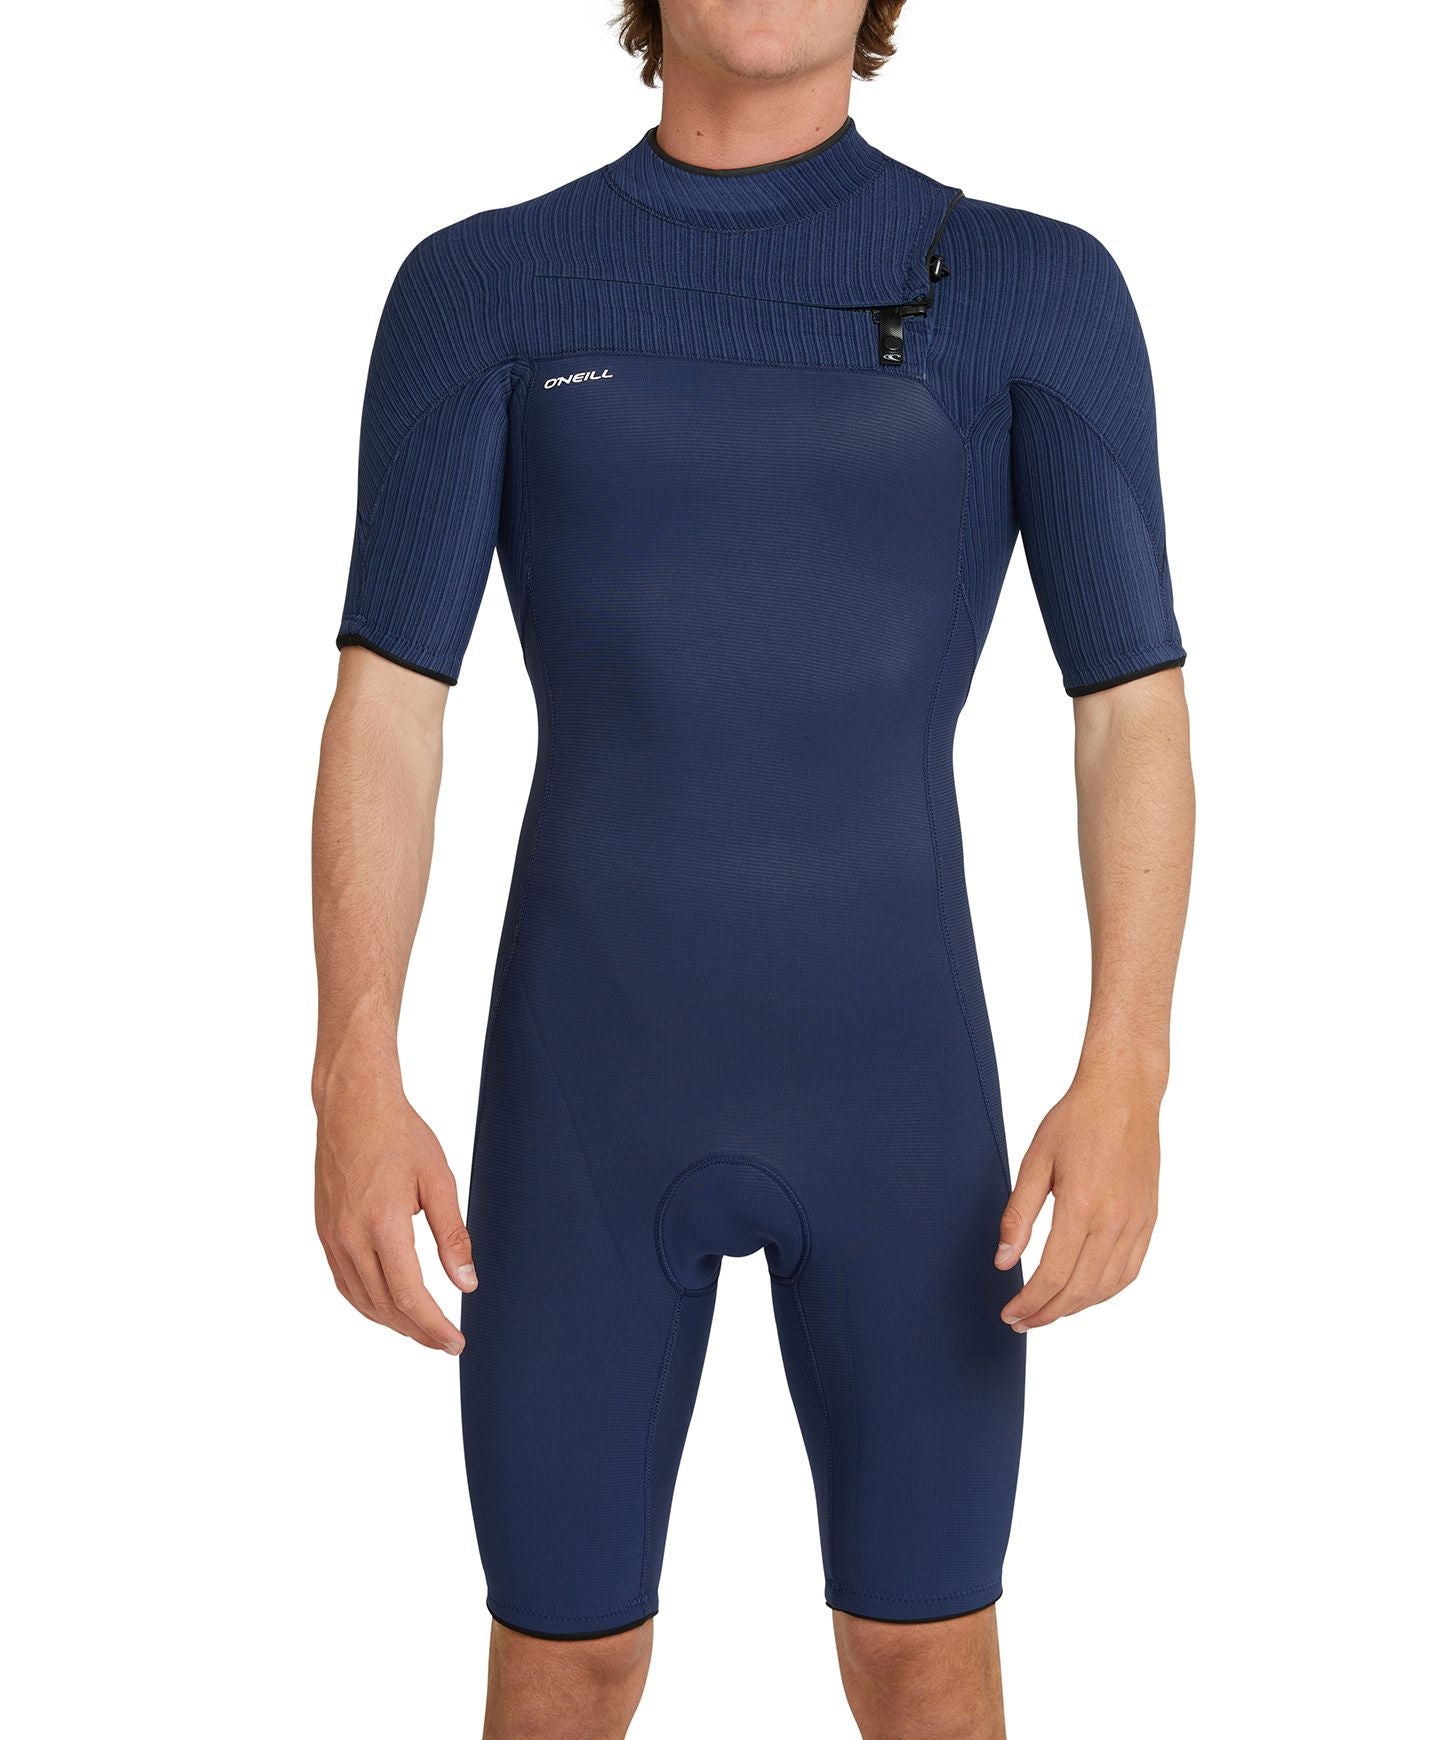 Hyperfreak Short Sleeve Springsuit 2mm Chest Zip Wetsuit - Navy